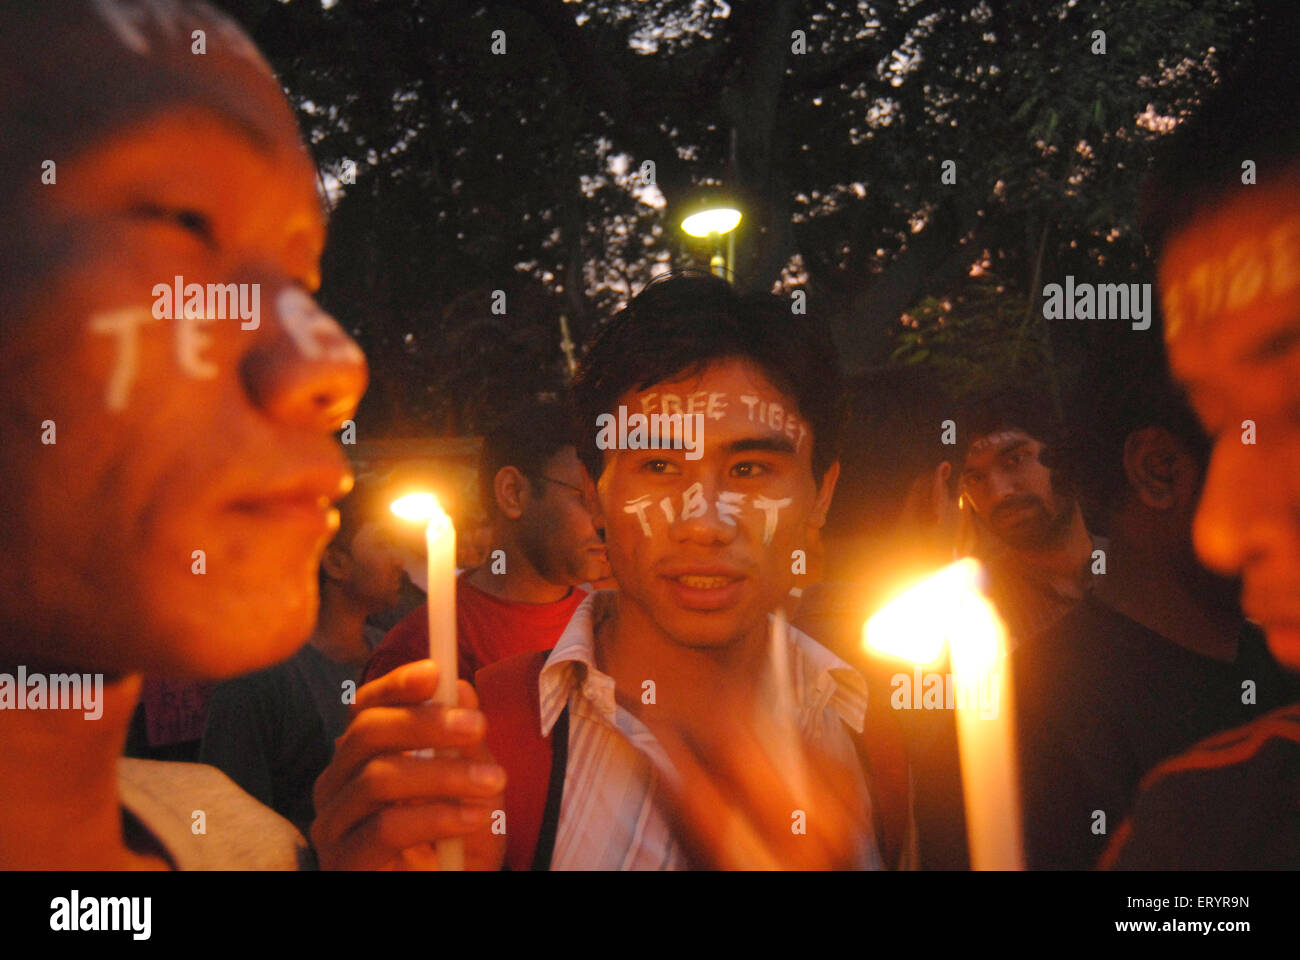 Tíbet libre escrito en la cara, budistas que protestan contra China sosteniendo velas, Bombay, Mumbai, Maharashtra, India, Asia Foto de stock